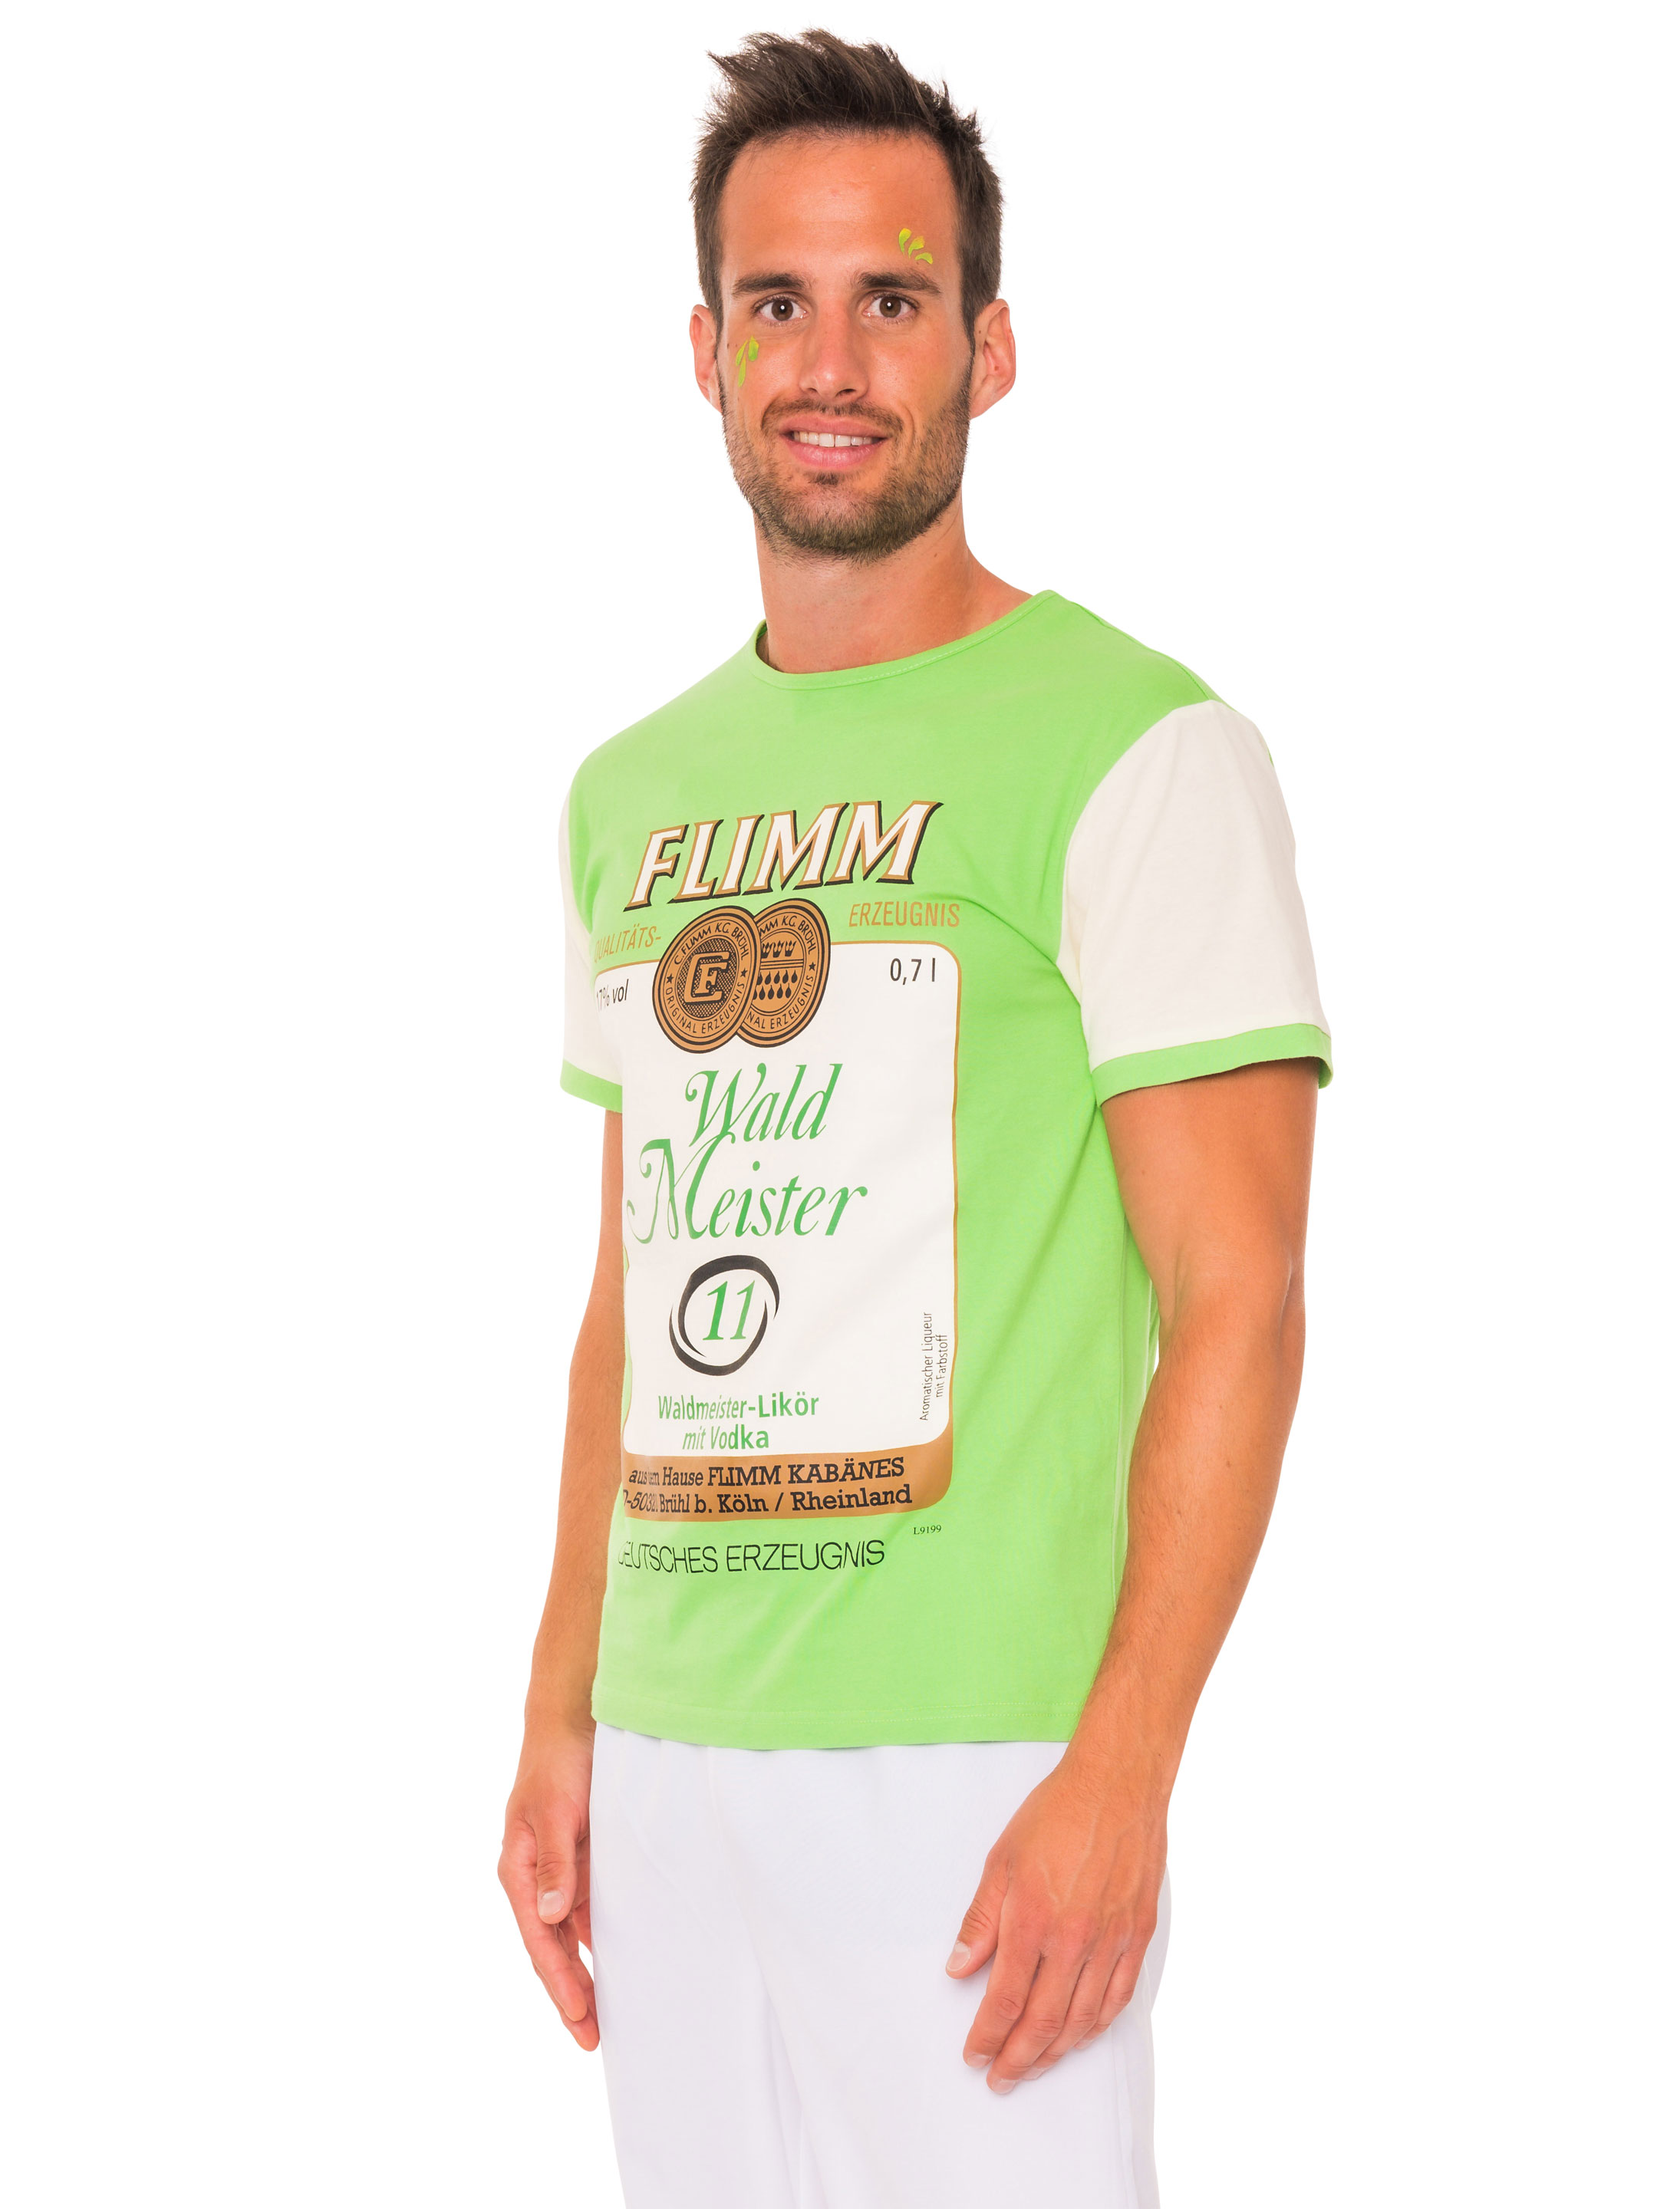 T-Shirt FLIMM Herren grün L